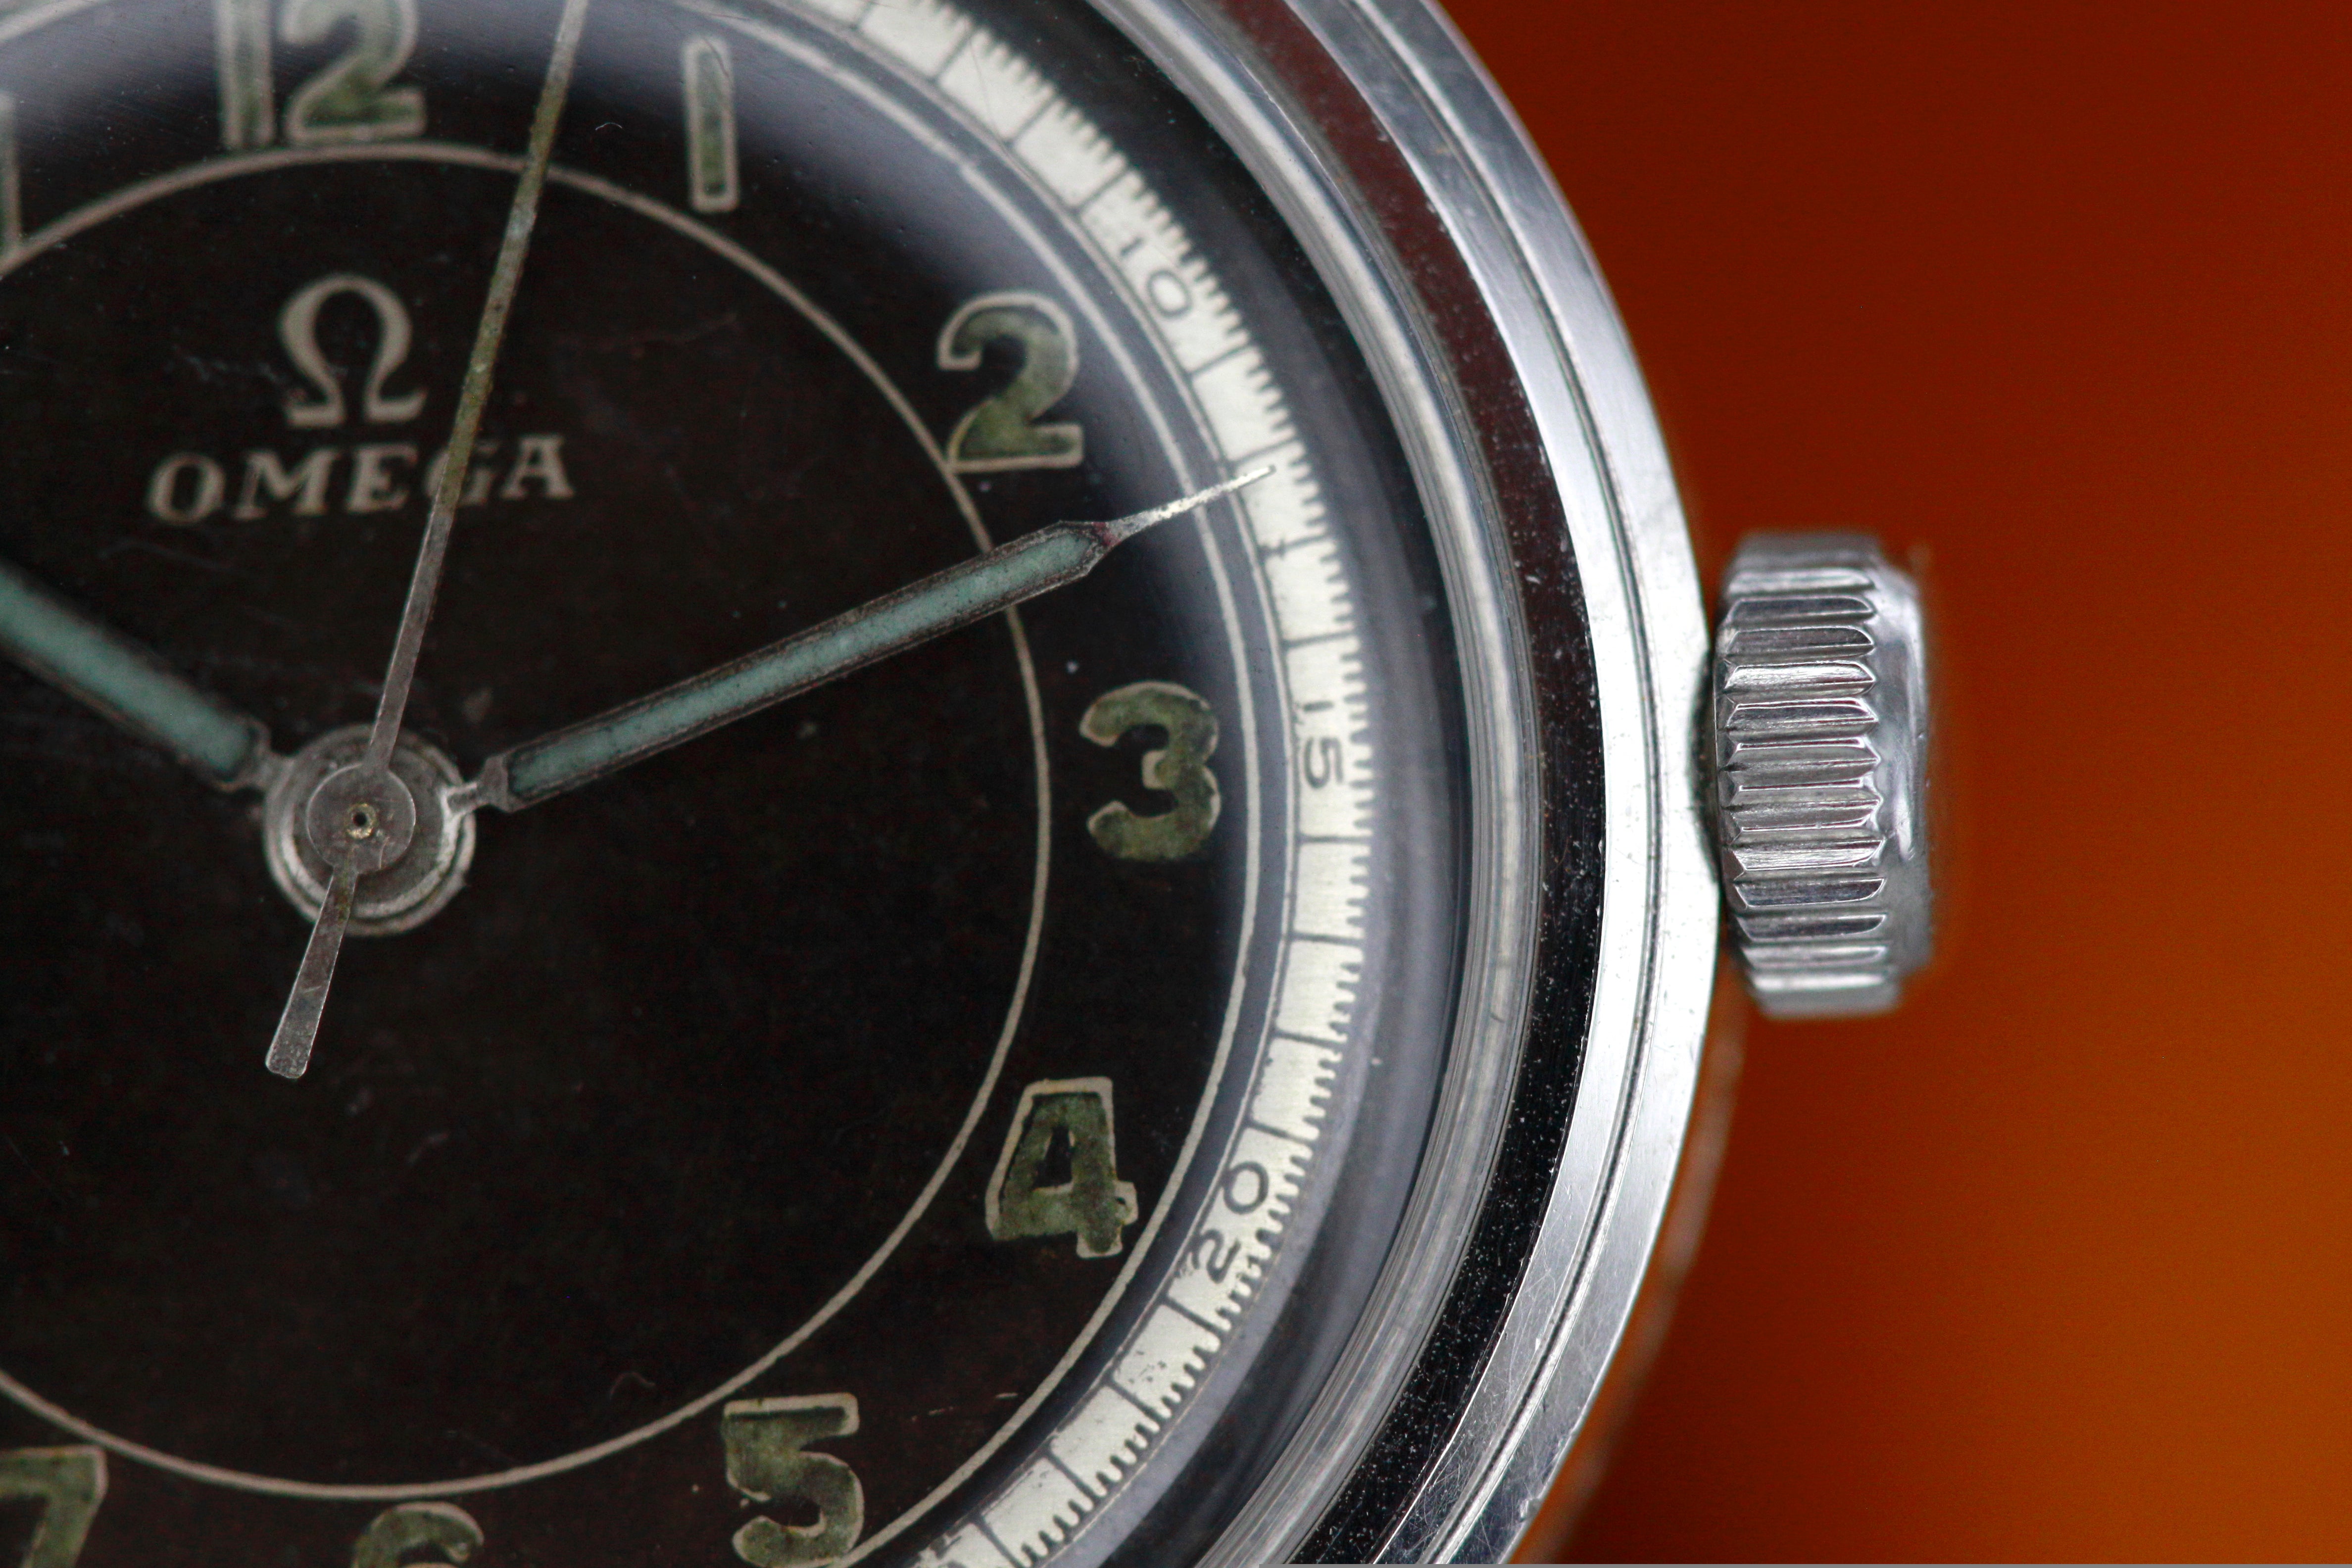 OMEGA military Radium from 1950s Black dial